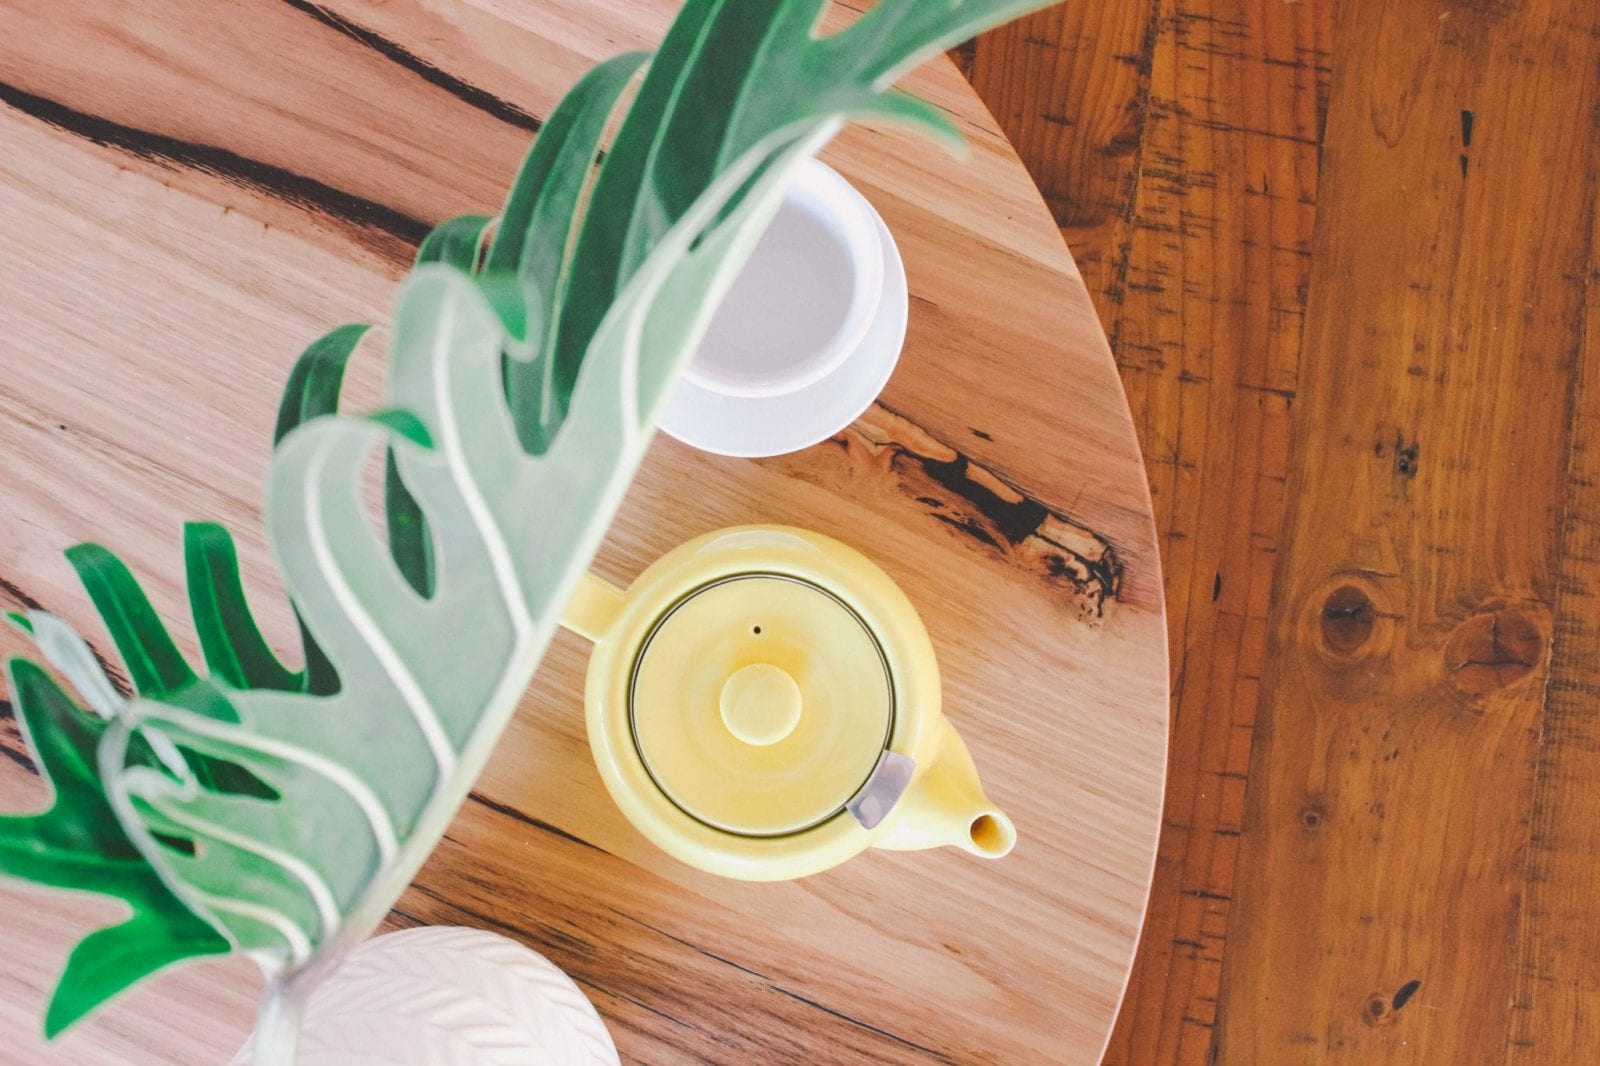 yellow teapot on table